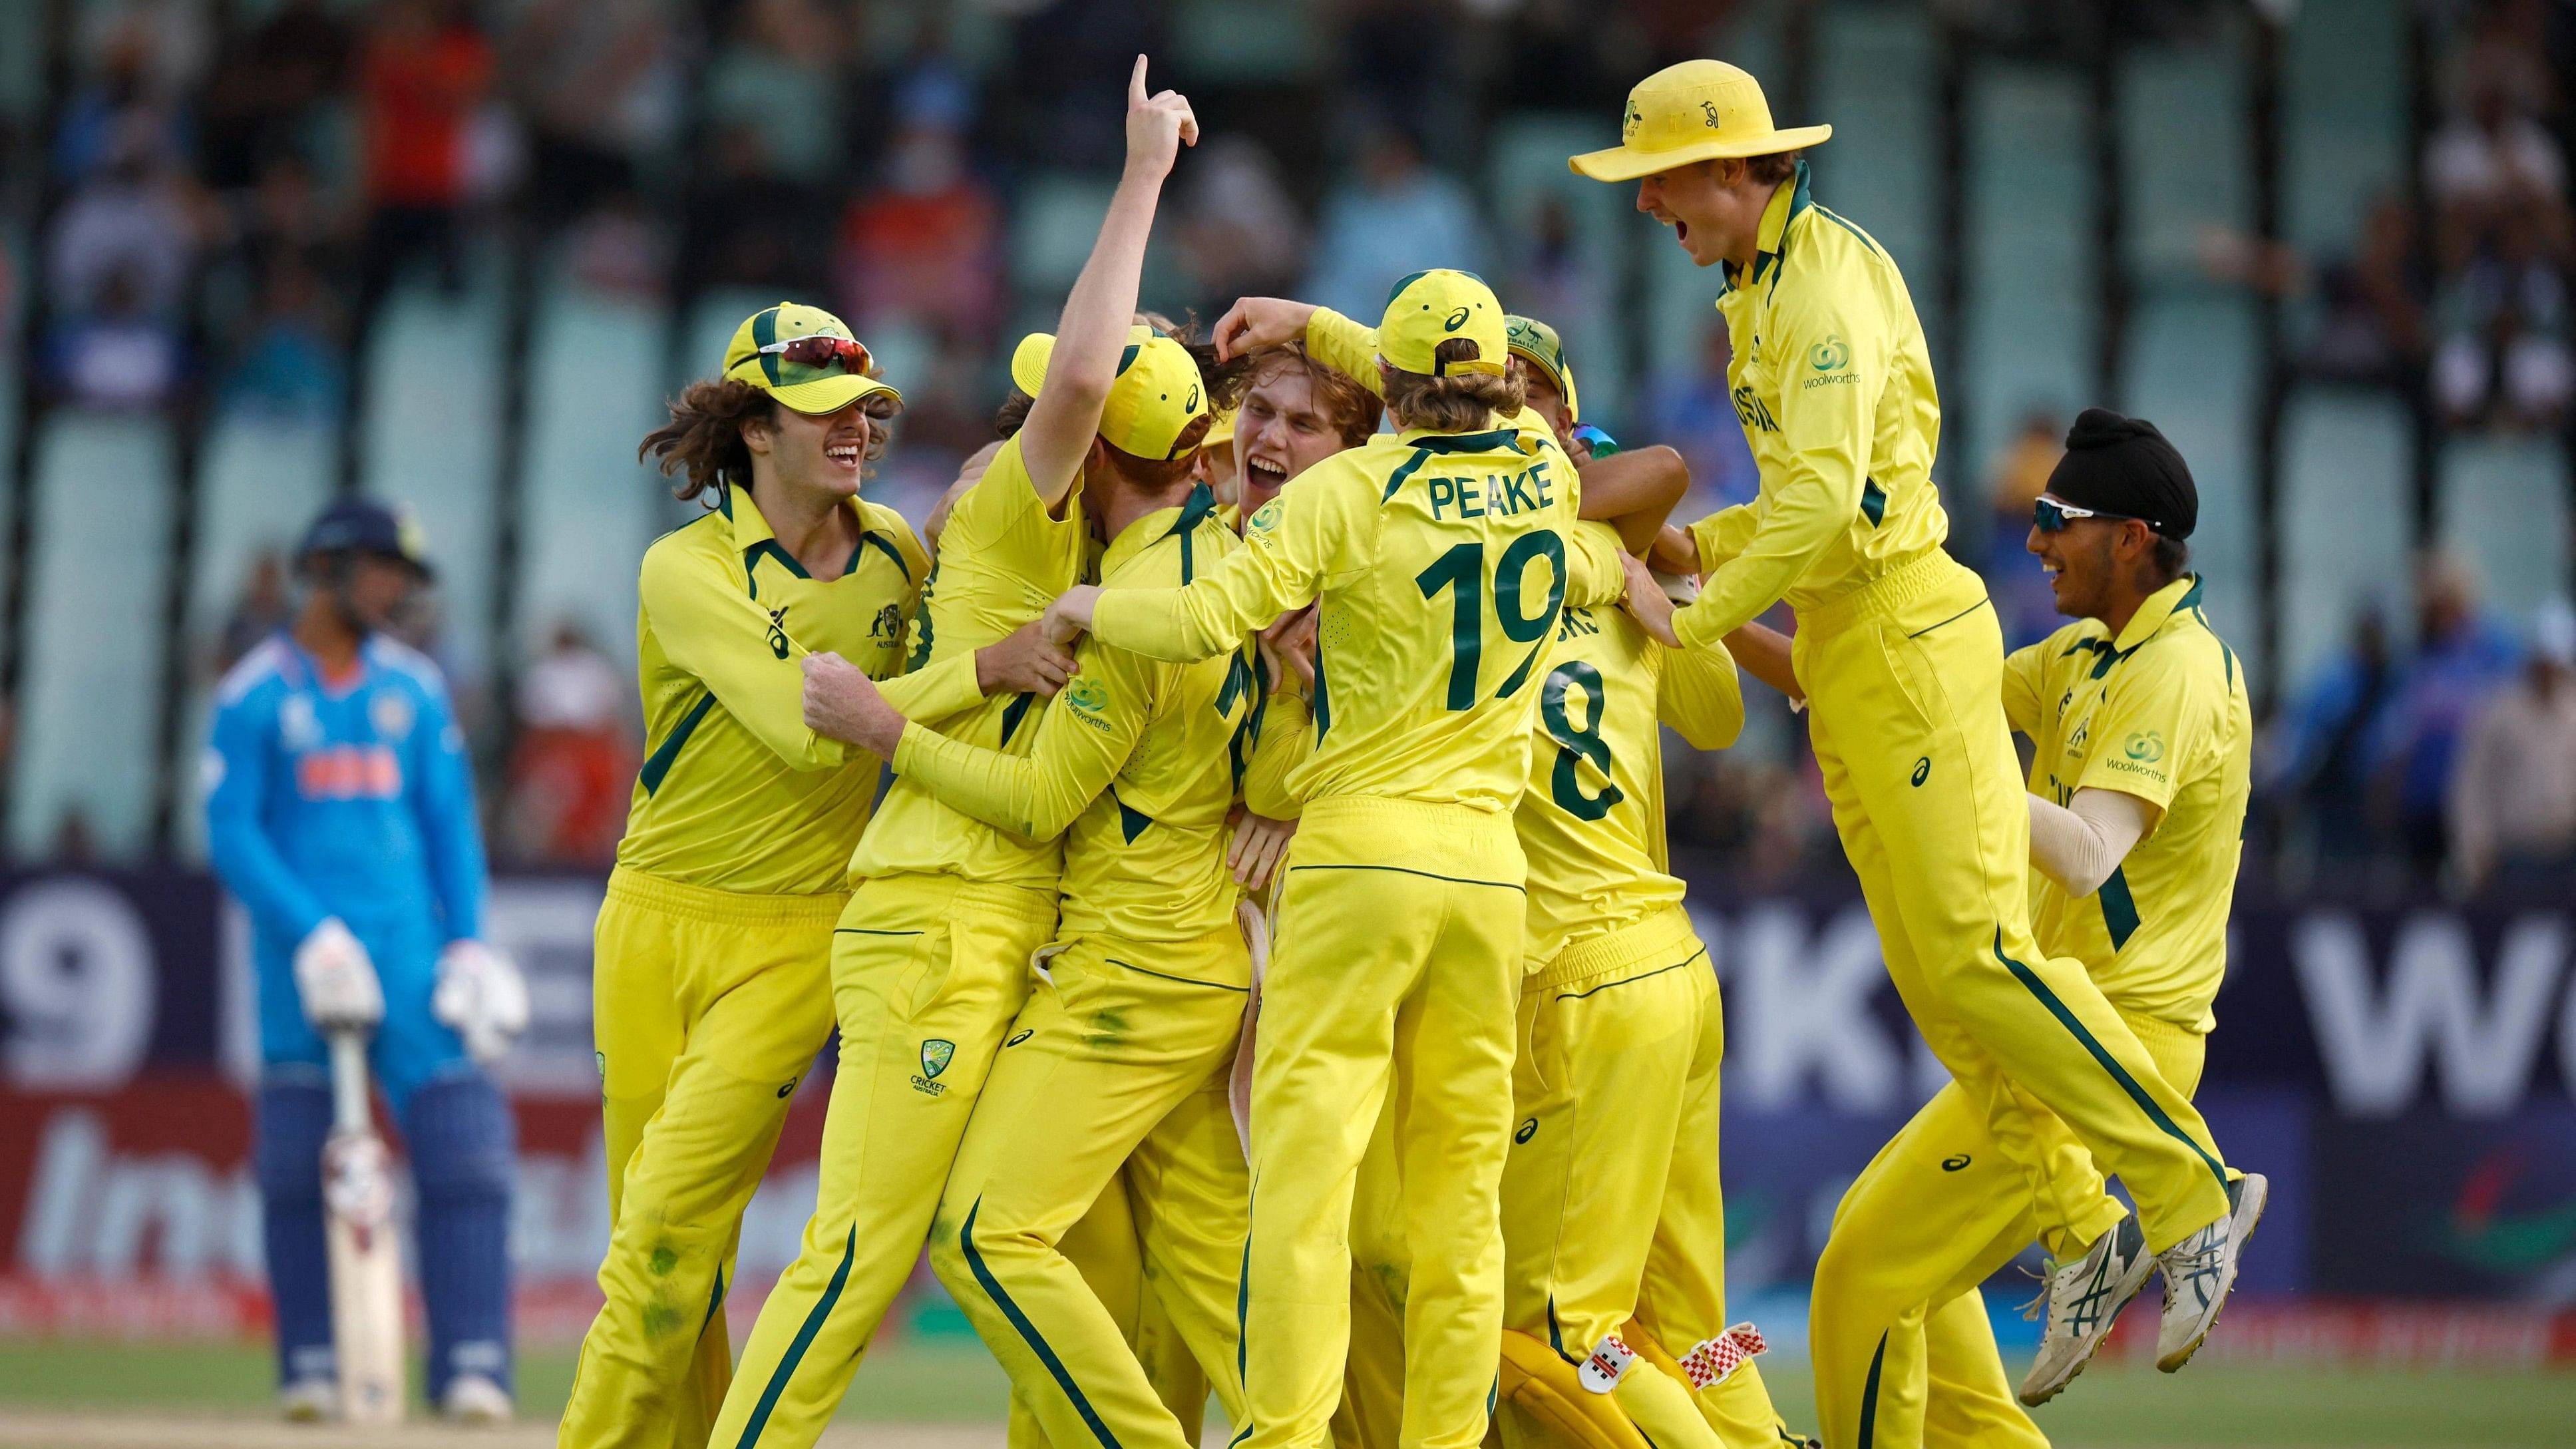 <div class="paragraphs"><p>Australian U-19 team celebrates after win</p></div>